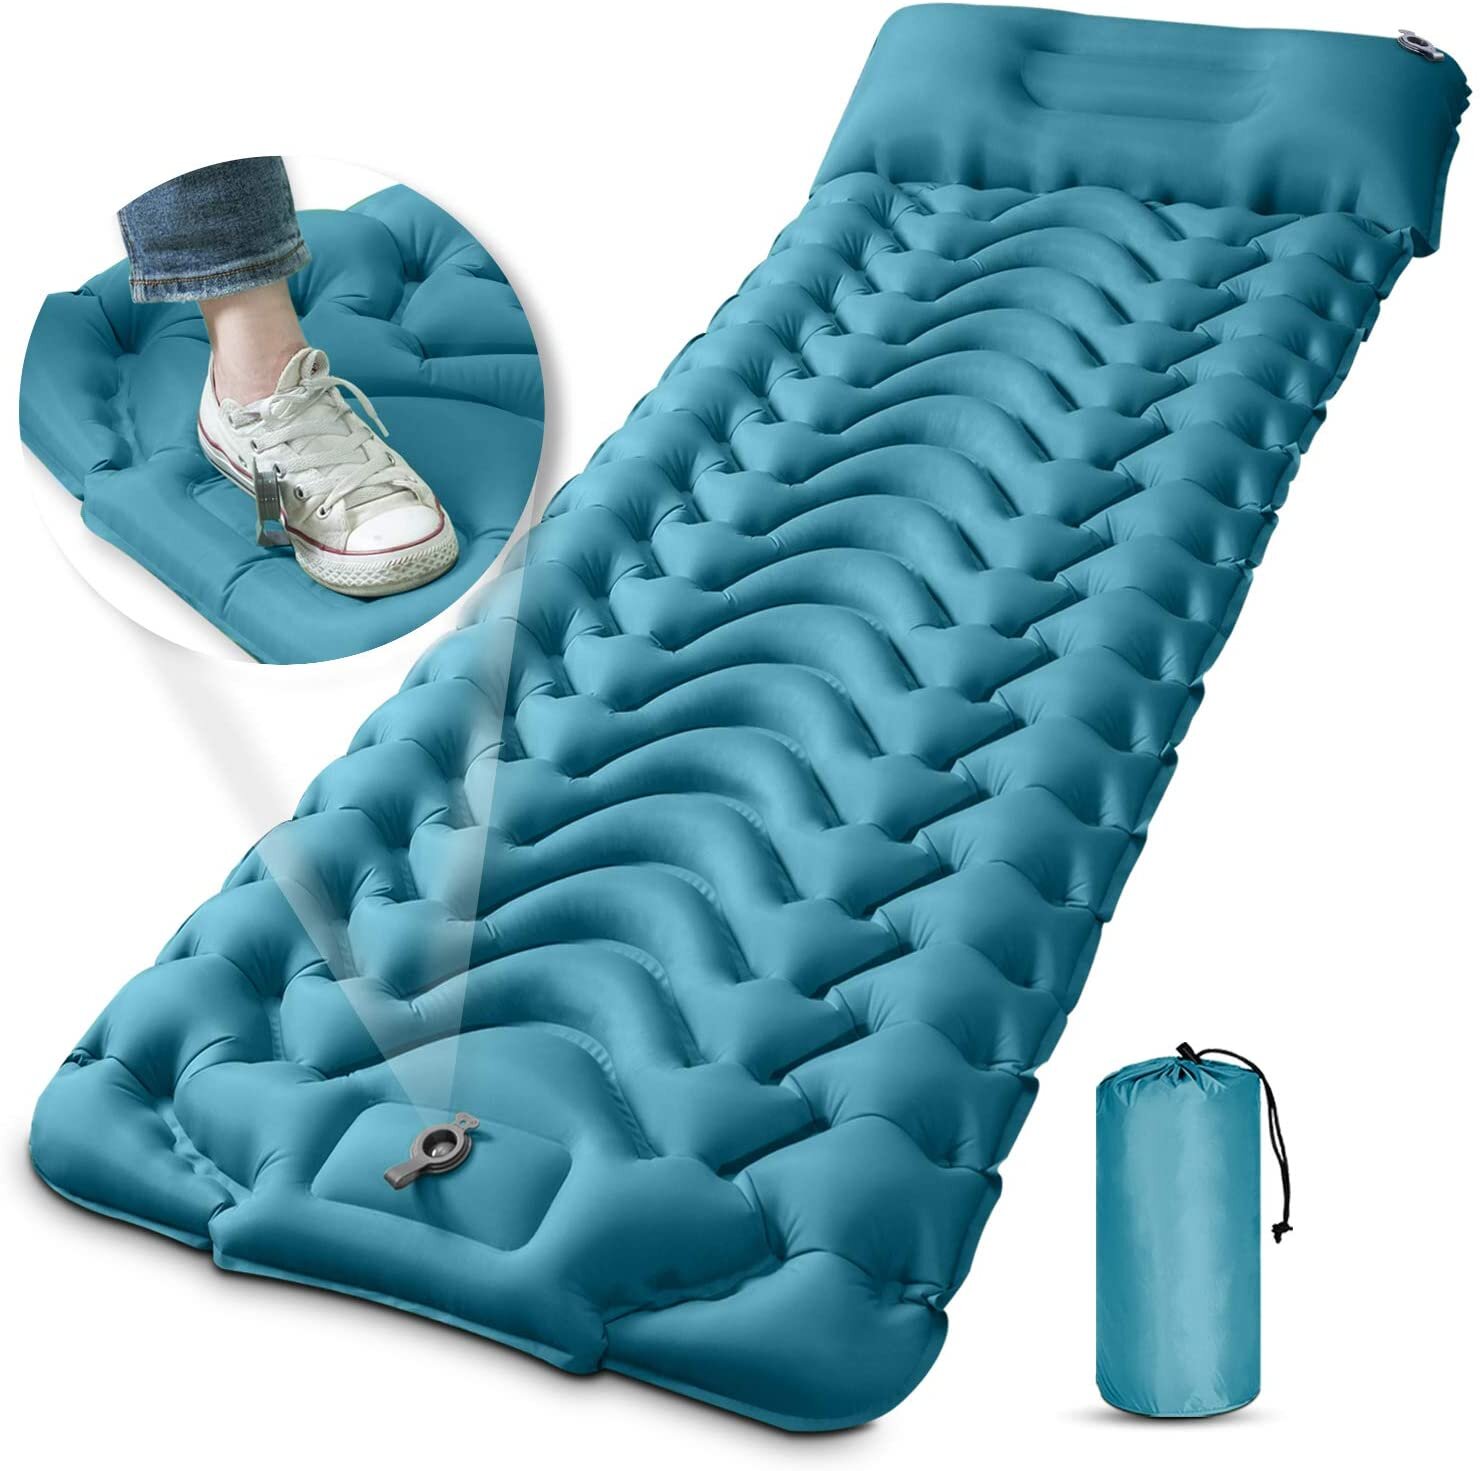 Ultralight 40D Nylon Outdoor Camping Inflatable Cushion Sleeping Mat Pad Air Bed